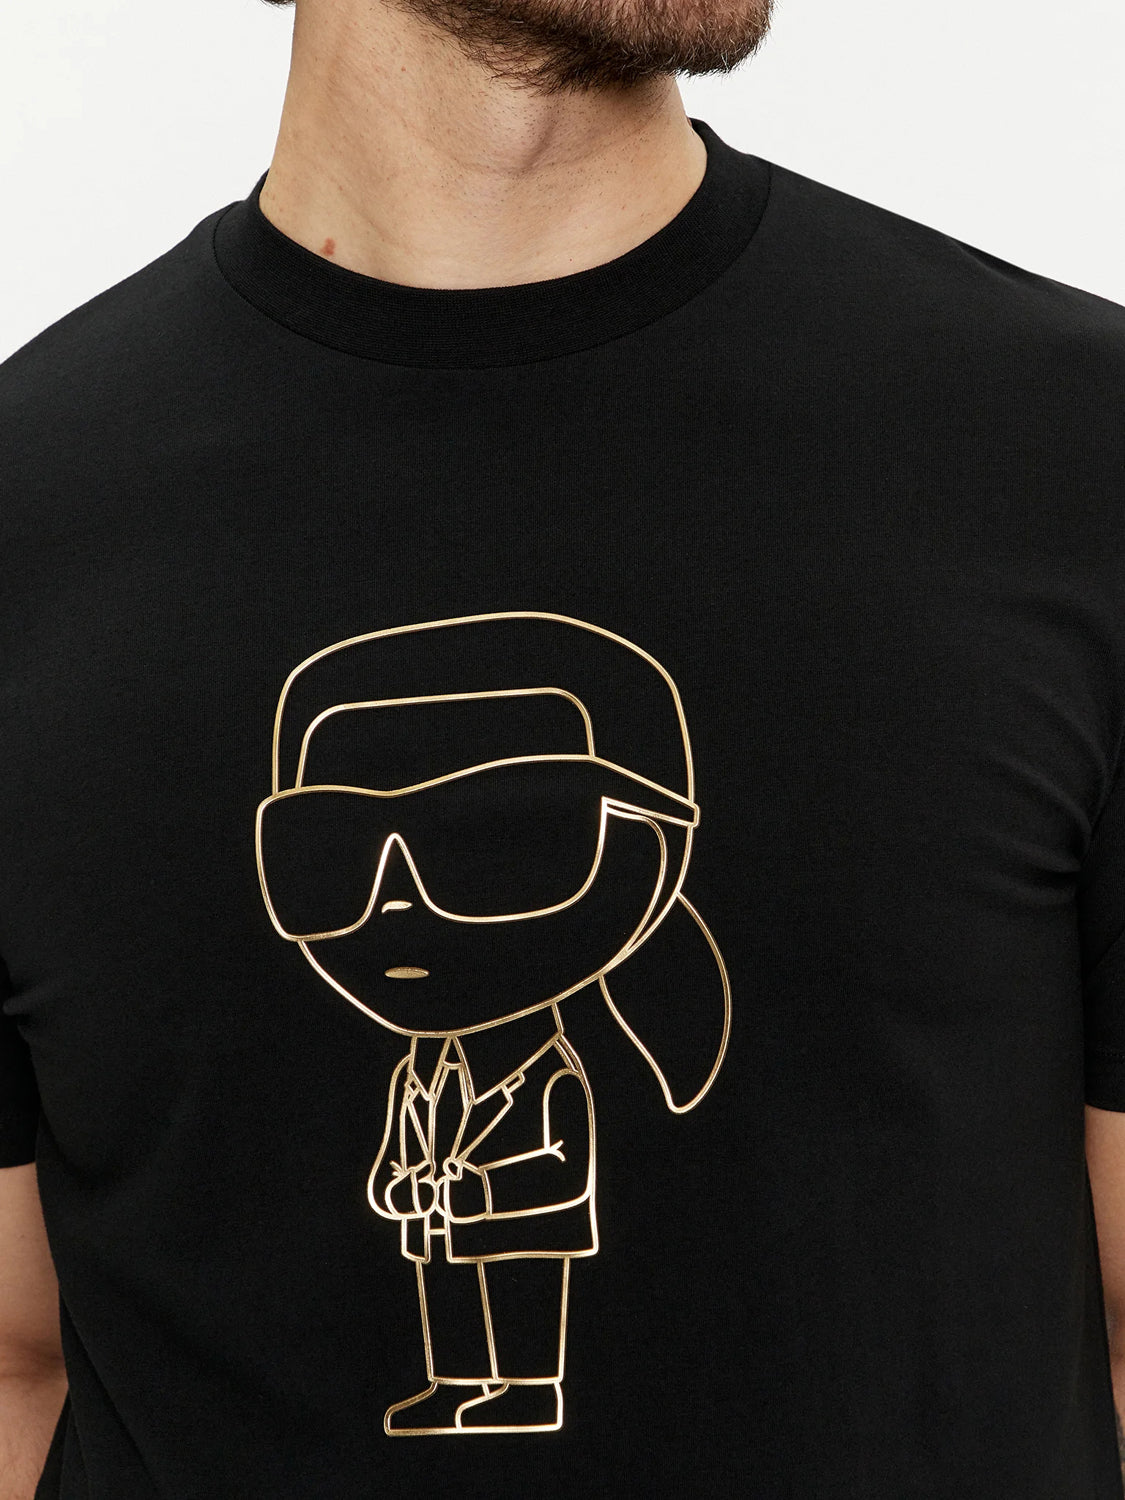 Karl Lagerfeld T Shirt Kl755054 Blk Gold Preto Ouro_shot3